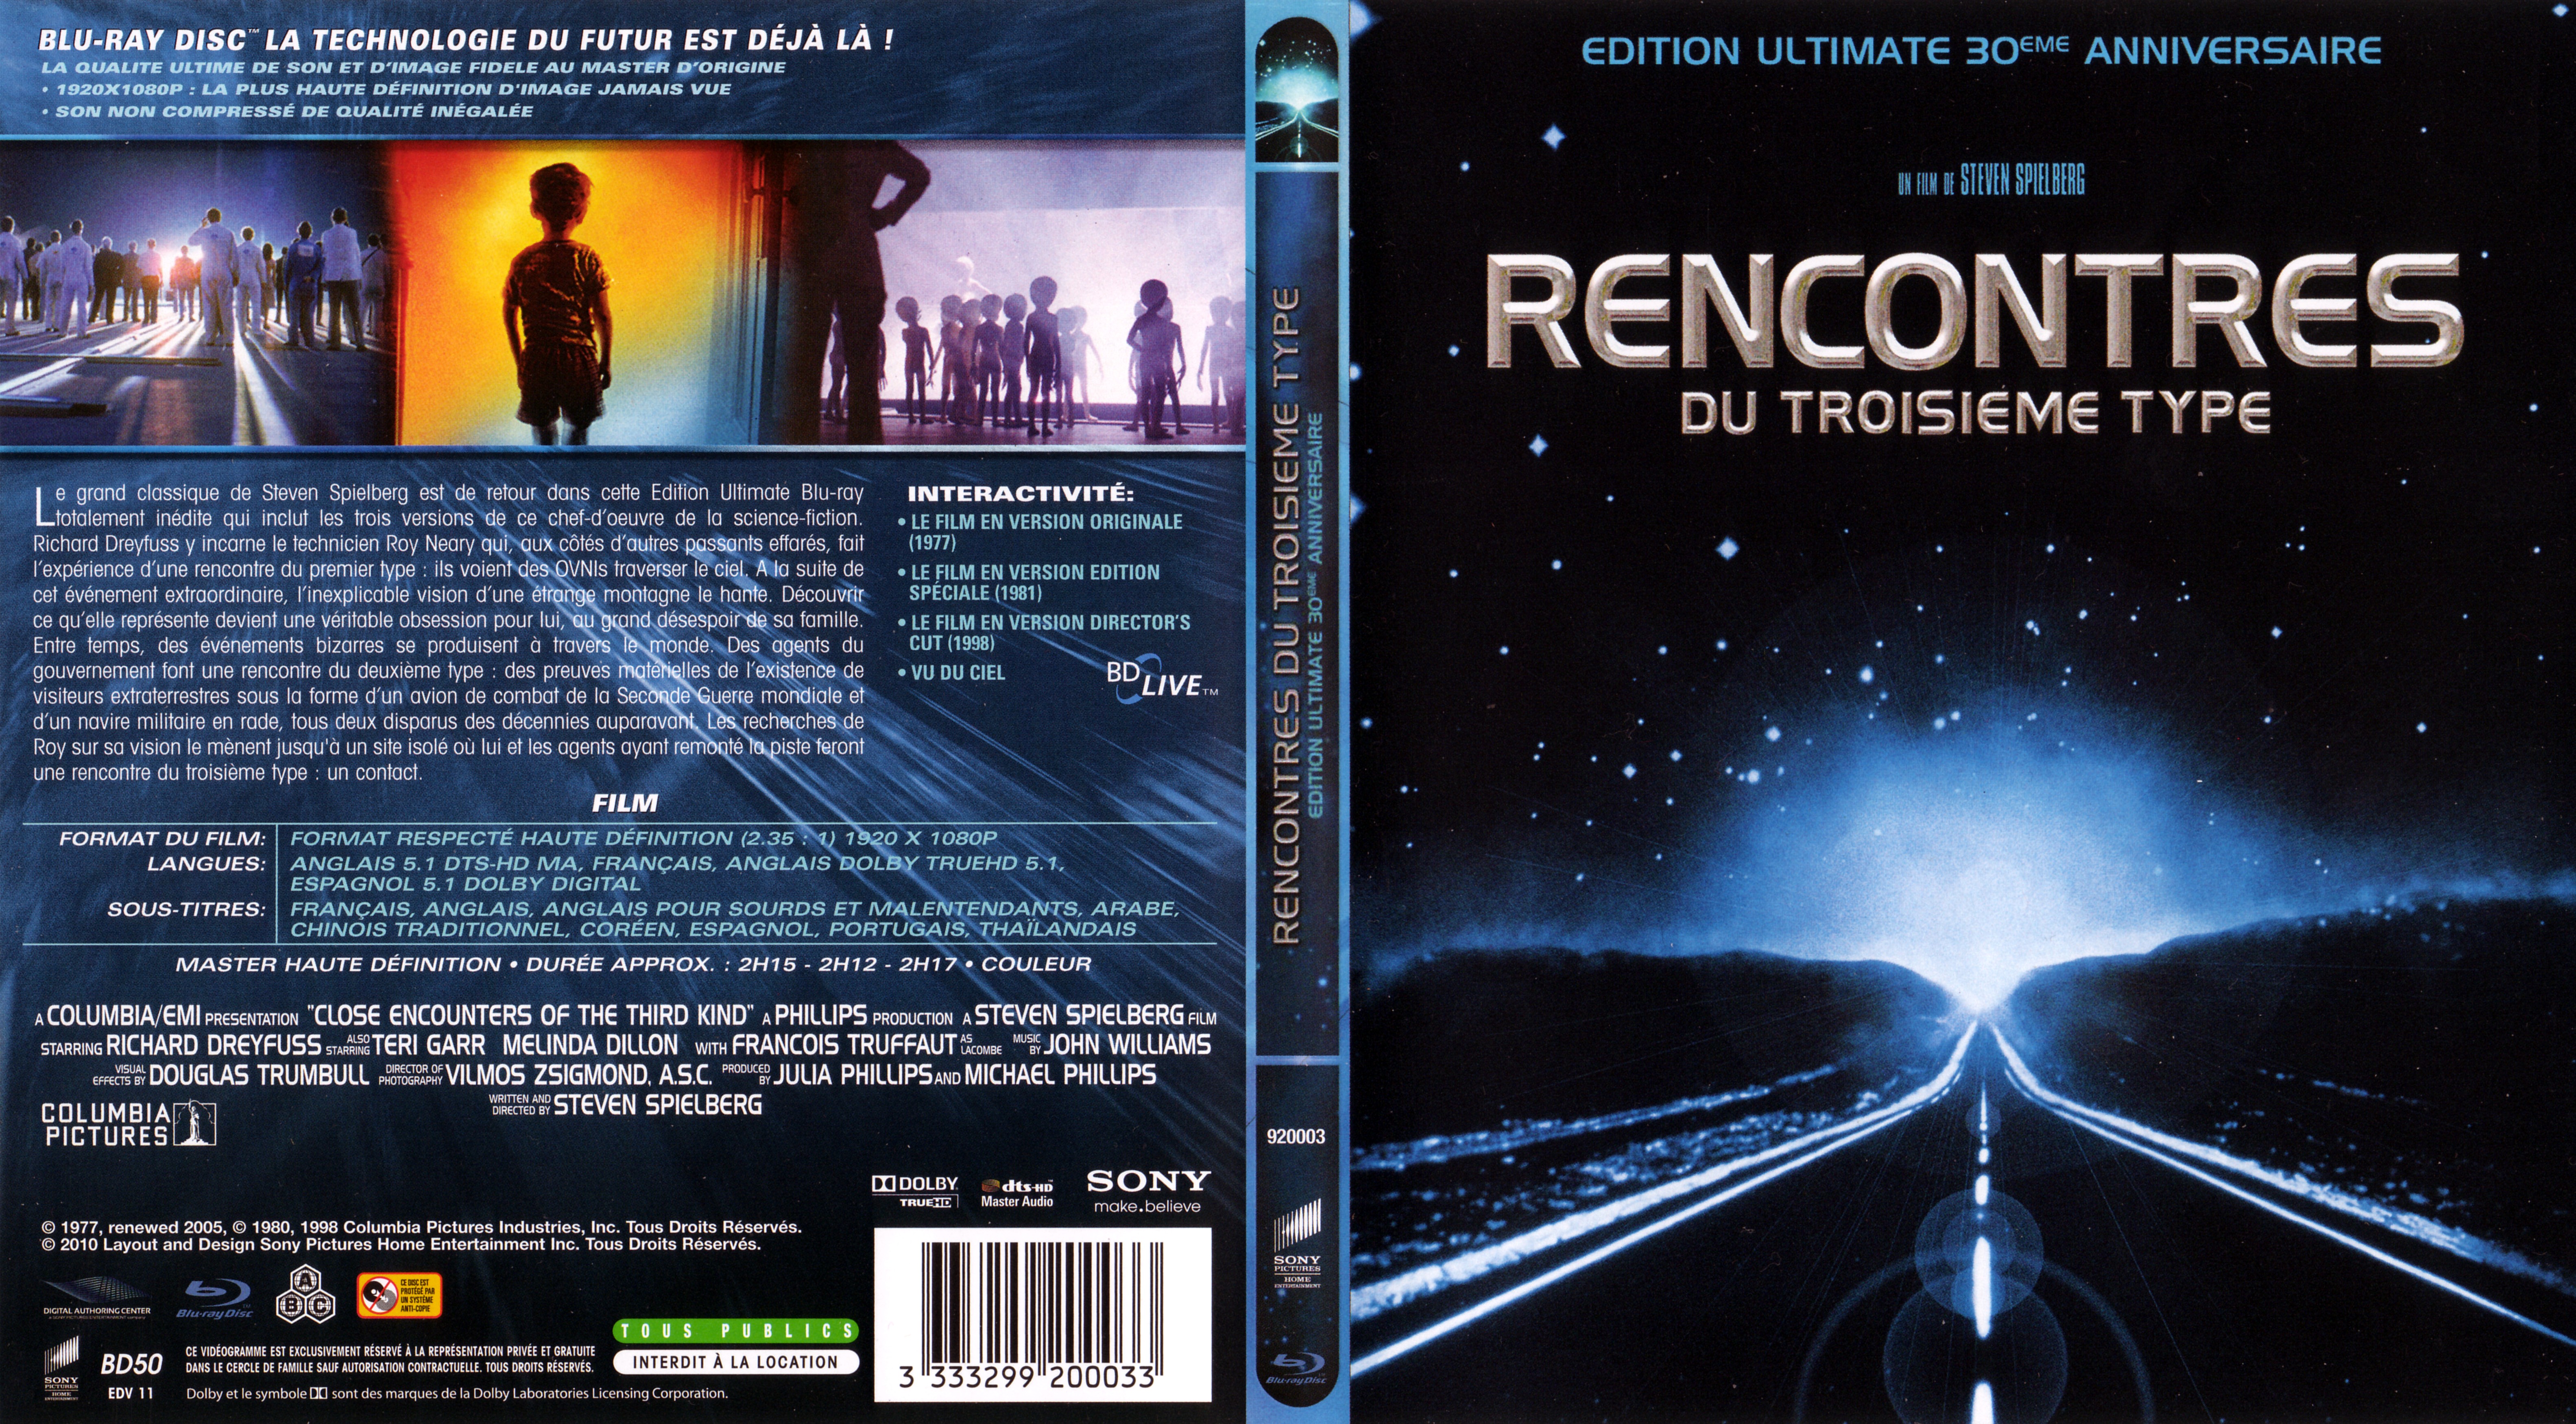 Jaquette DVD Rencontres du troisieme type (BLU-RAY) v3